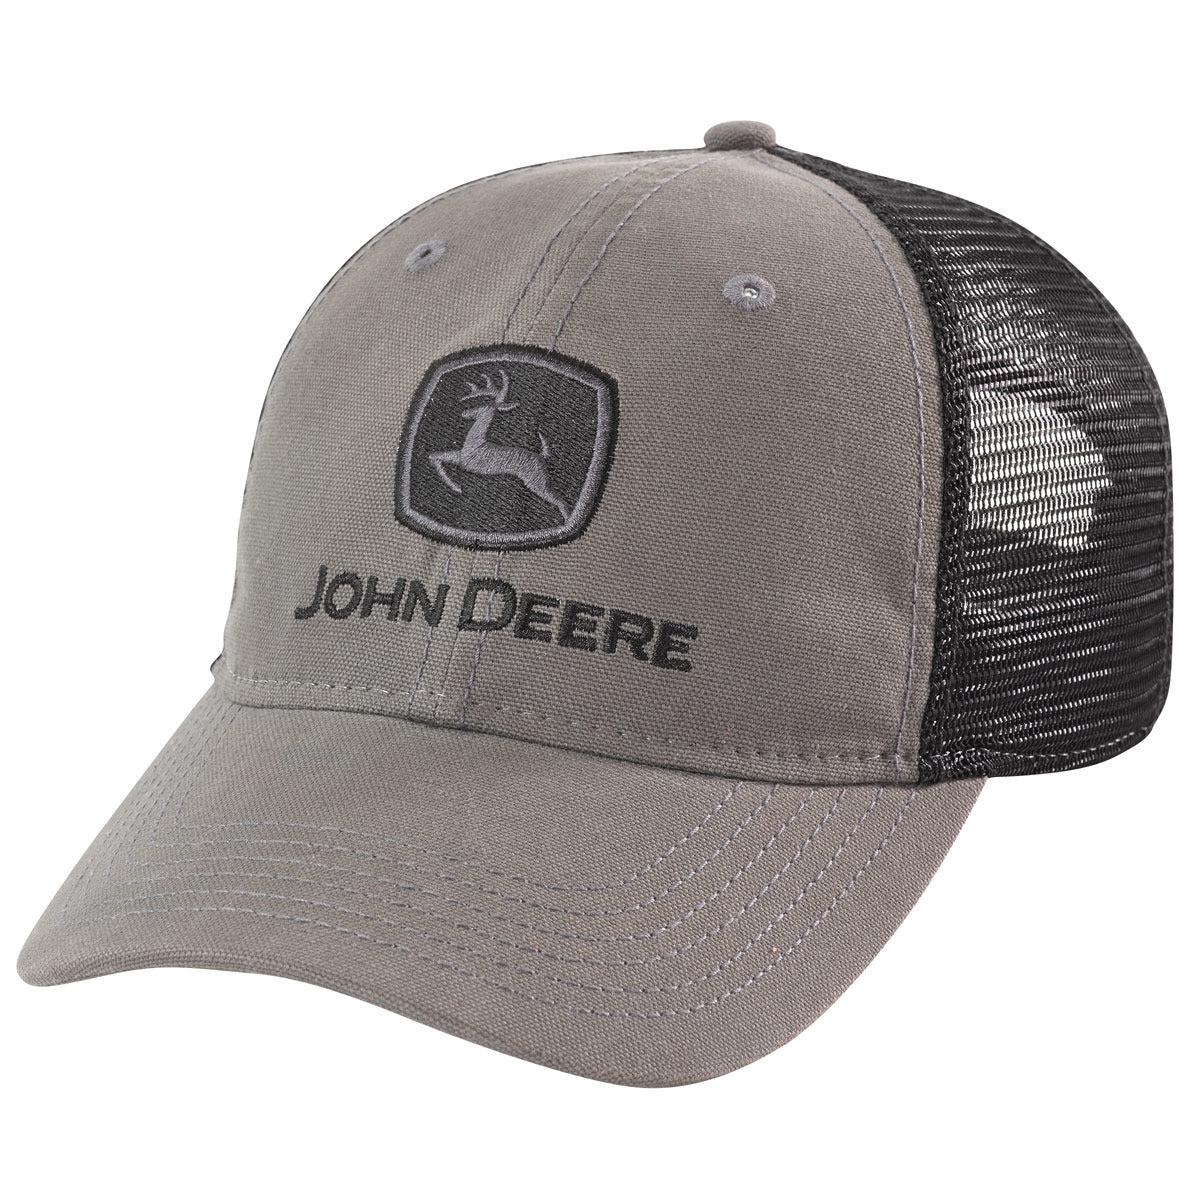 John Deere Men's Charcoal Hat/Cap - LP73670